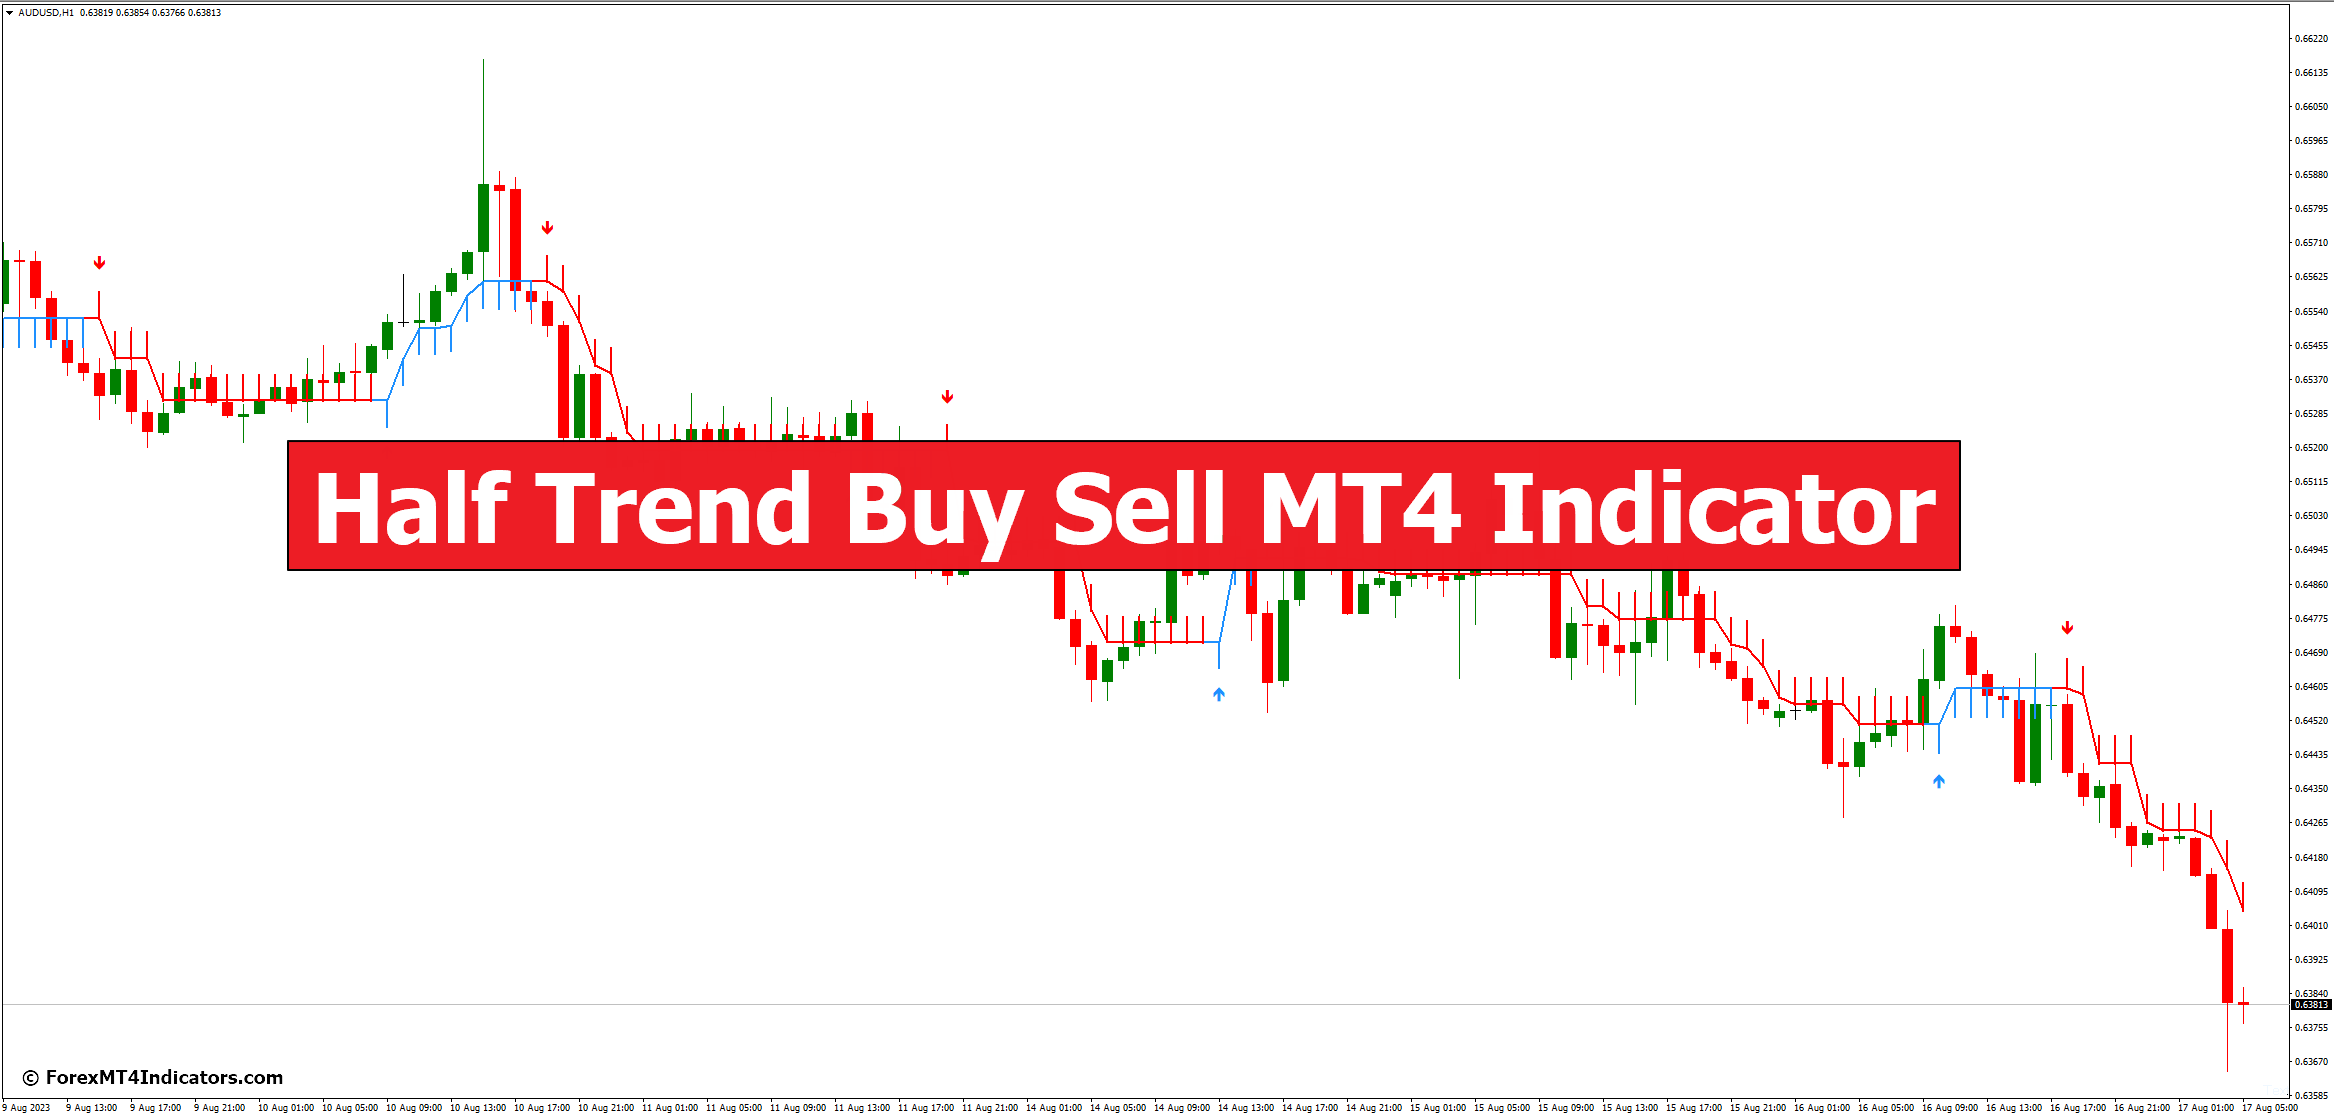 Half Trend Buy Sell MT4 Indicator